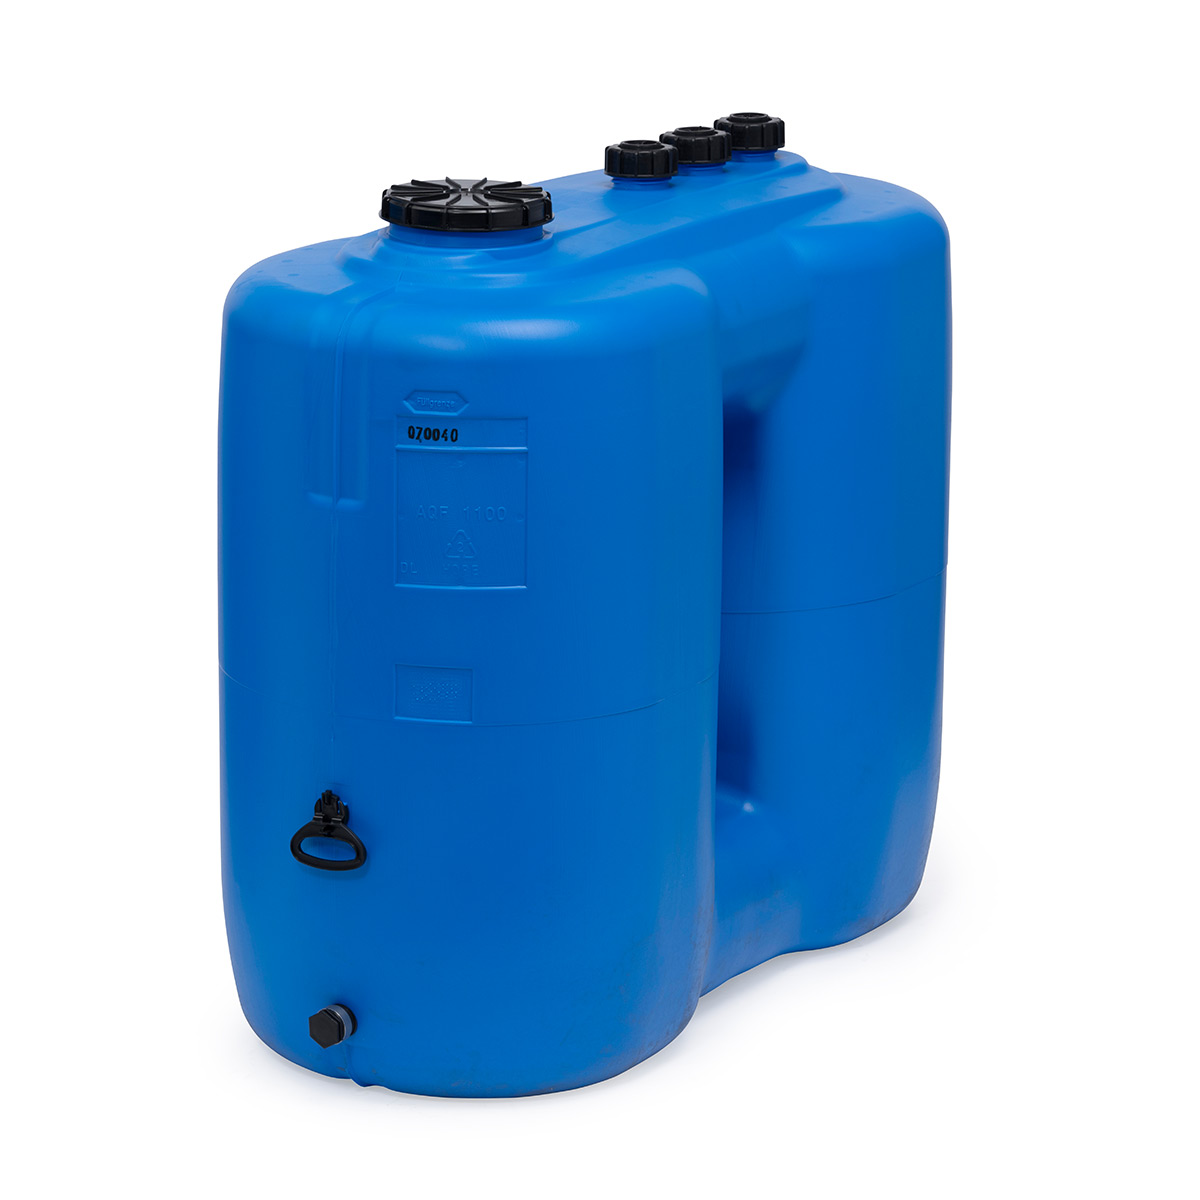 Lagertank AQF blau, 1500 l, aus PE-HD, Trinkwasser geeignet